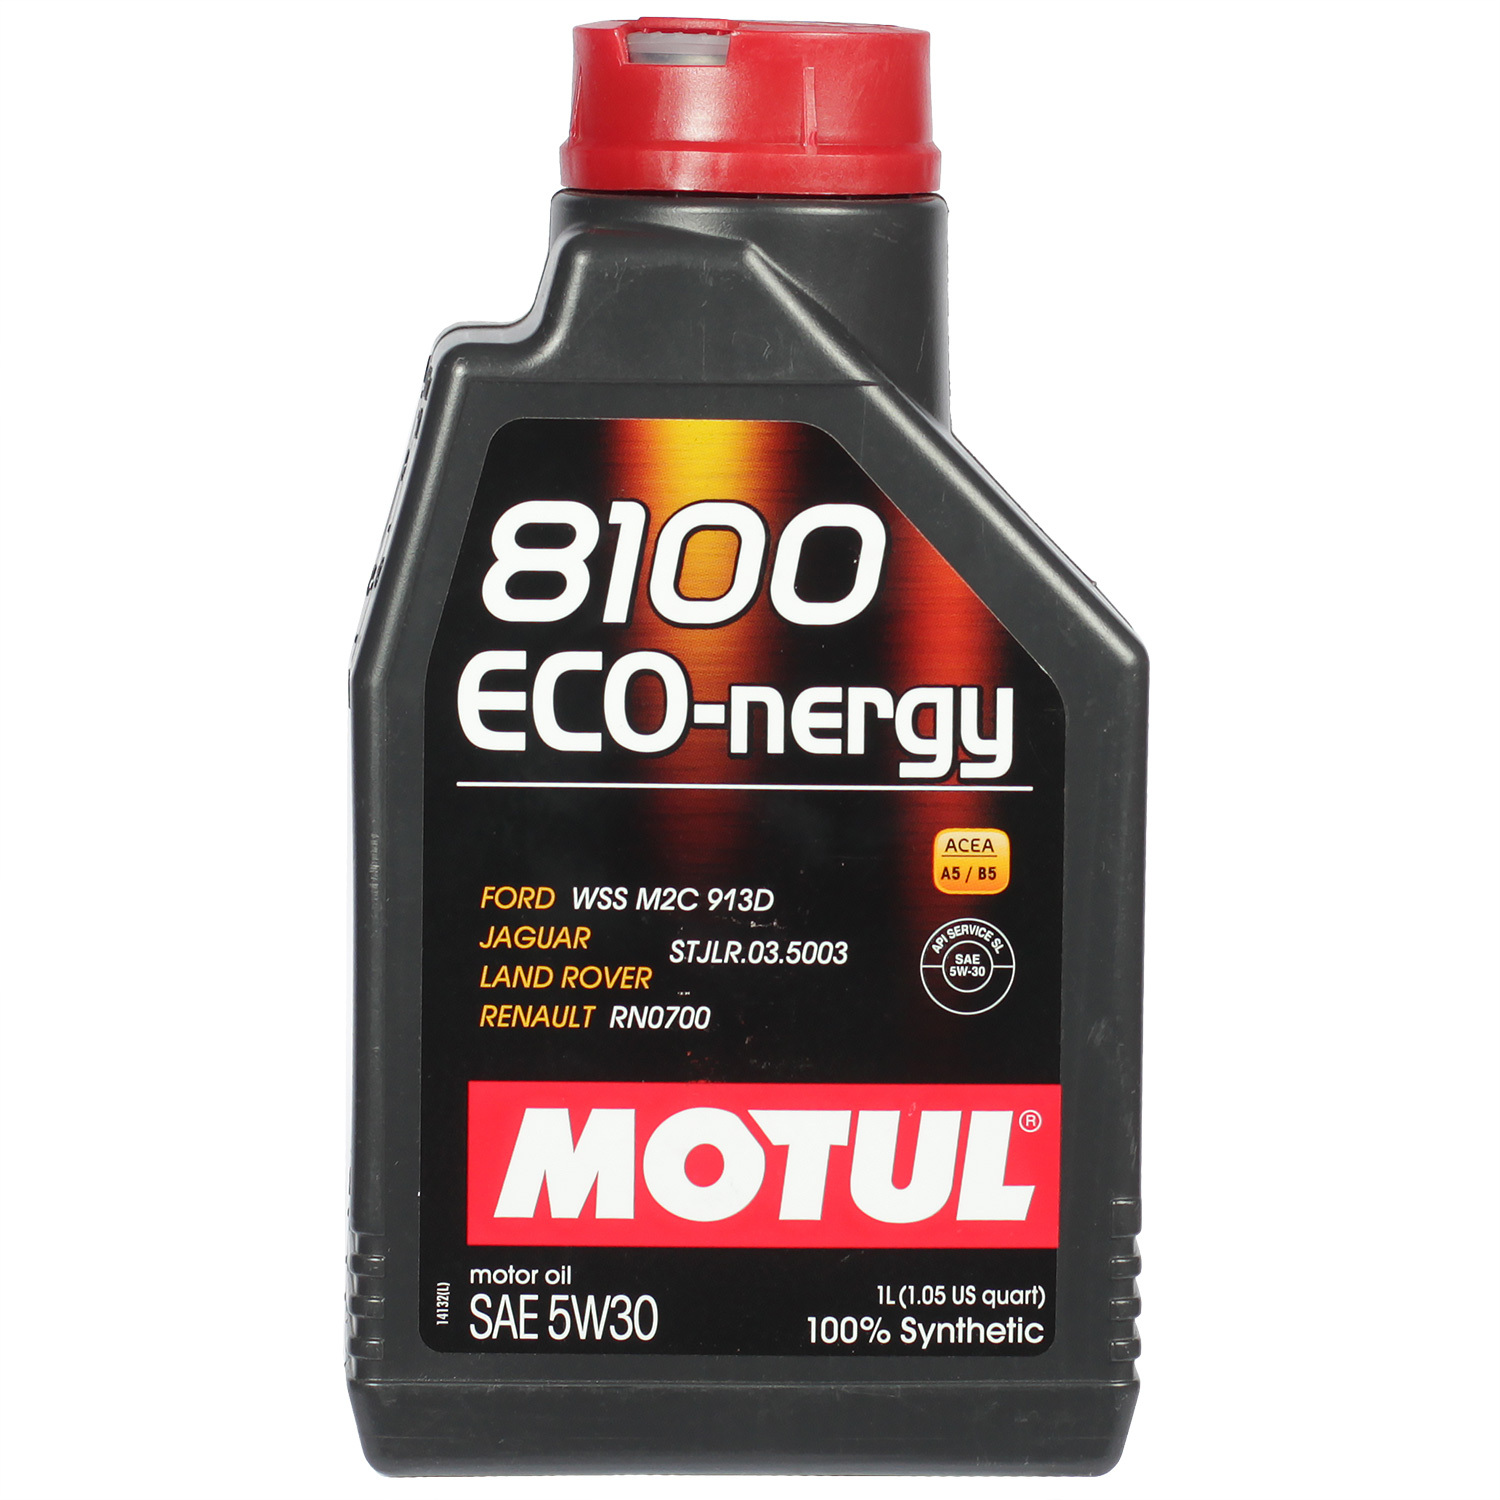 Motul Моторное масло Motul 8100 Eco-nergy 5W-30, 1 л motul 8100 eco nergy 5w 30 1л